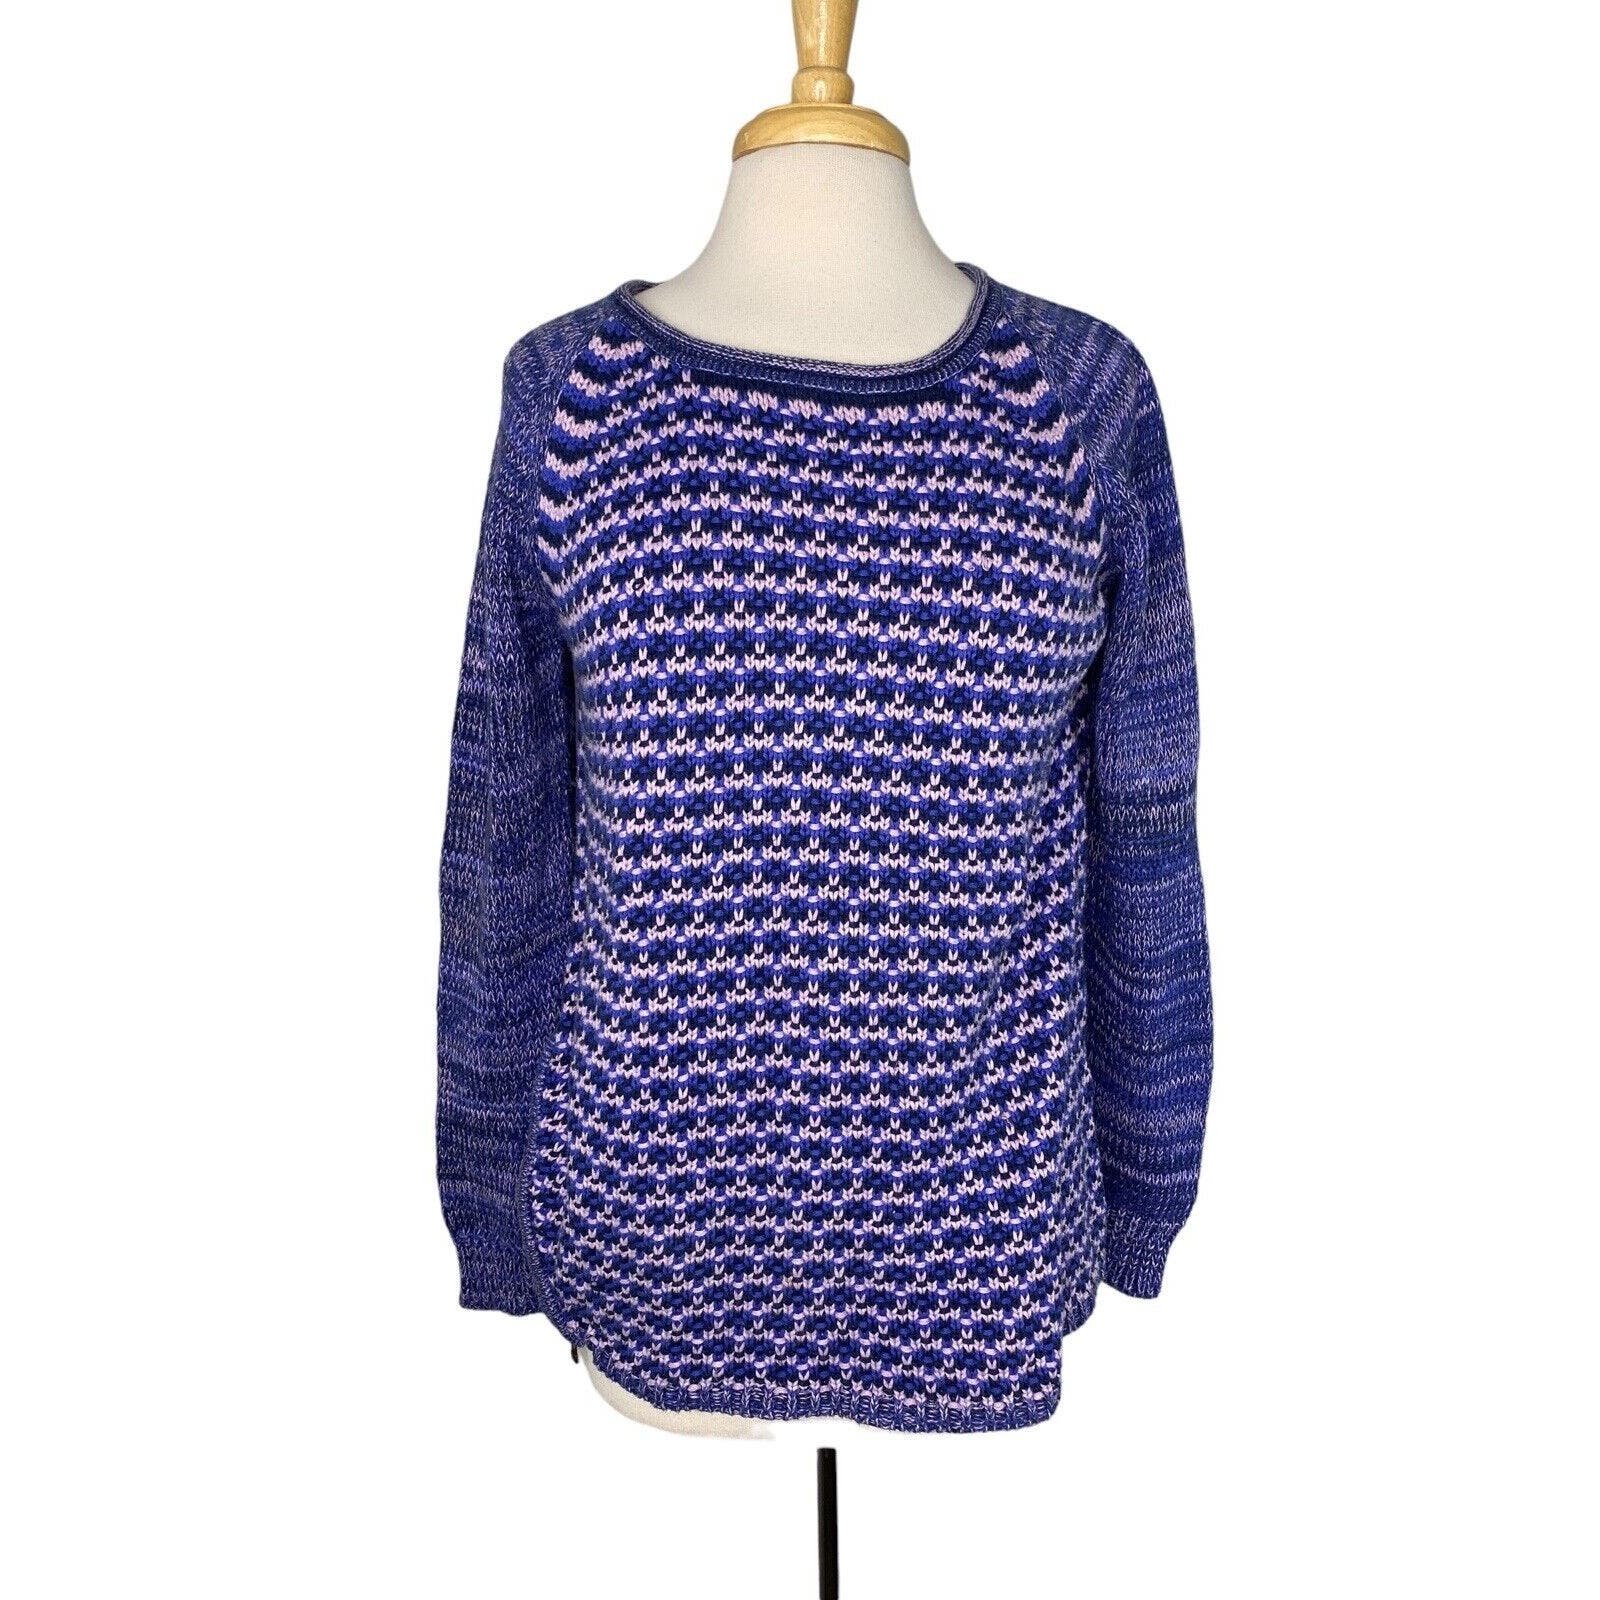 large selection WRAP LONDON Blue Pink Variegated Chunky Knit Sweater Size US 8/10 UK 12/14 oKNxGlR3t outlet online shop